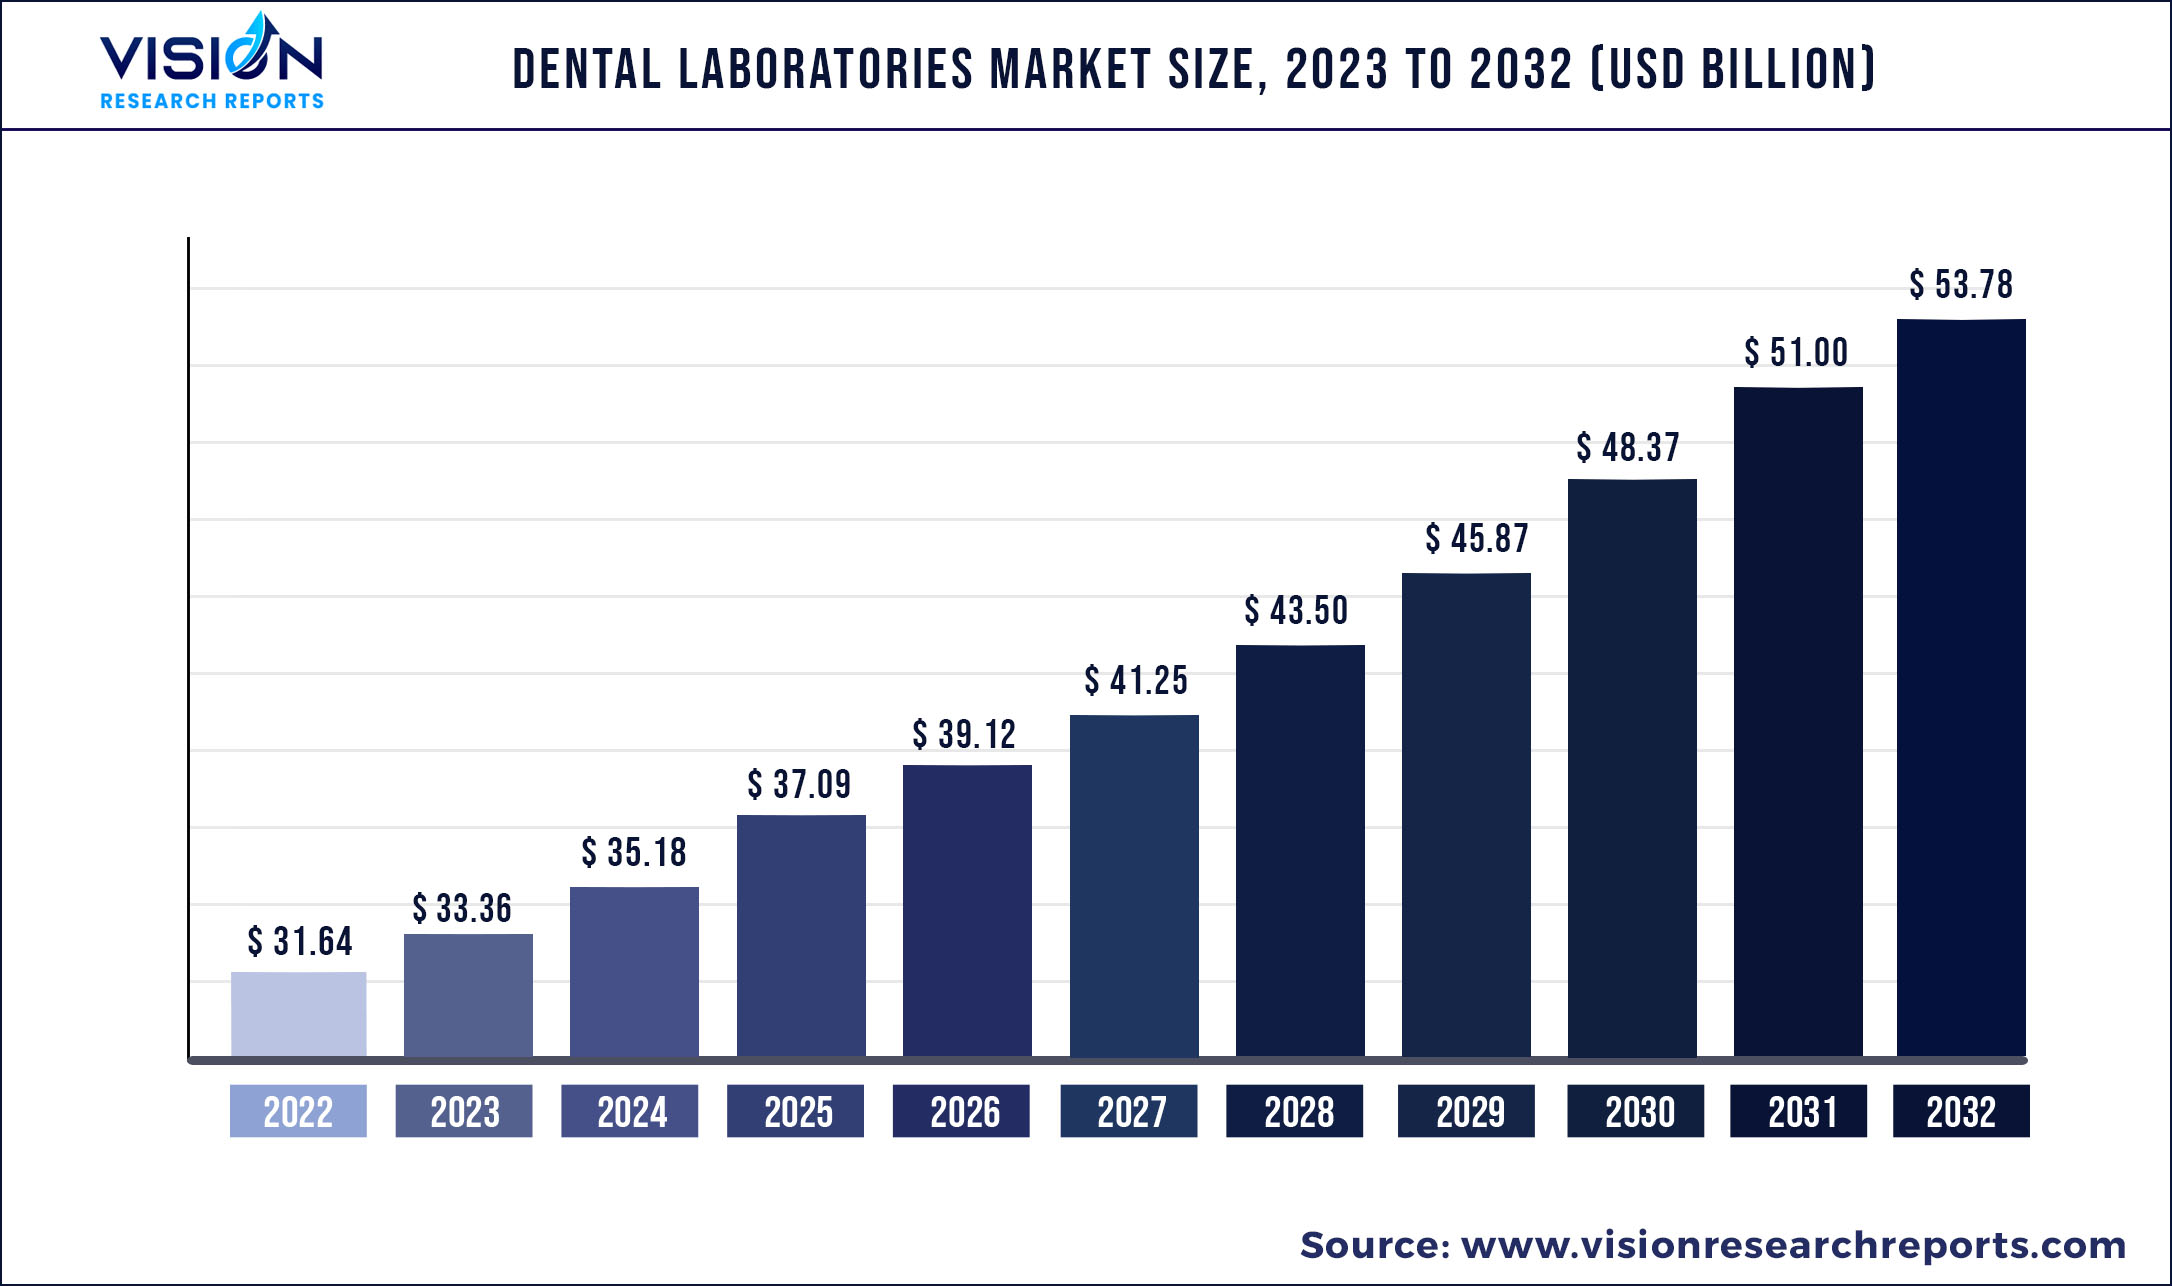 Dental Laboratories Market Size 2023 to 2032